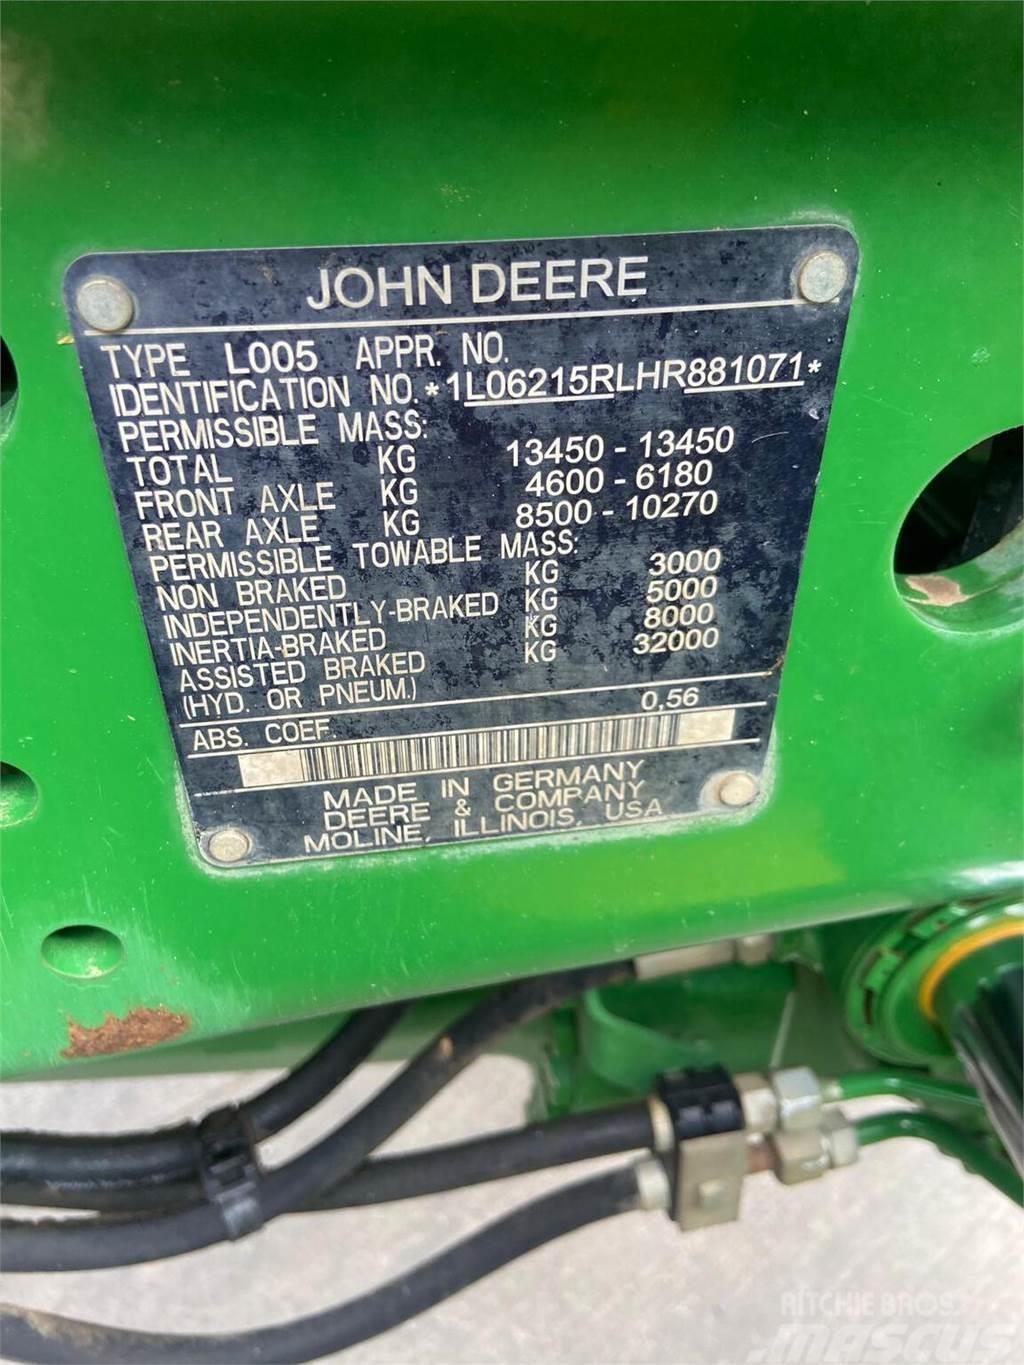 John Deere 6215R Traktorer